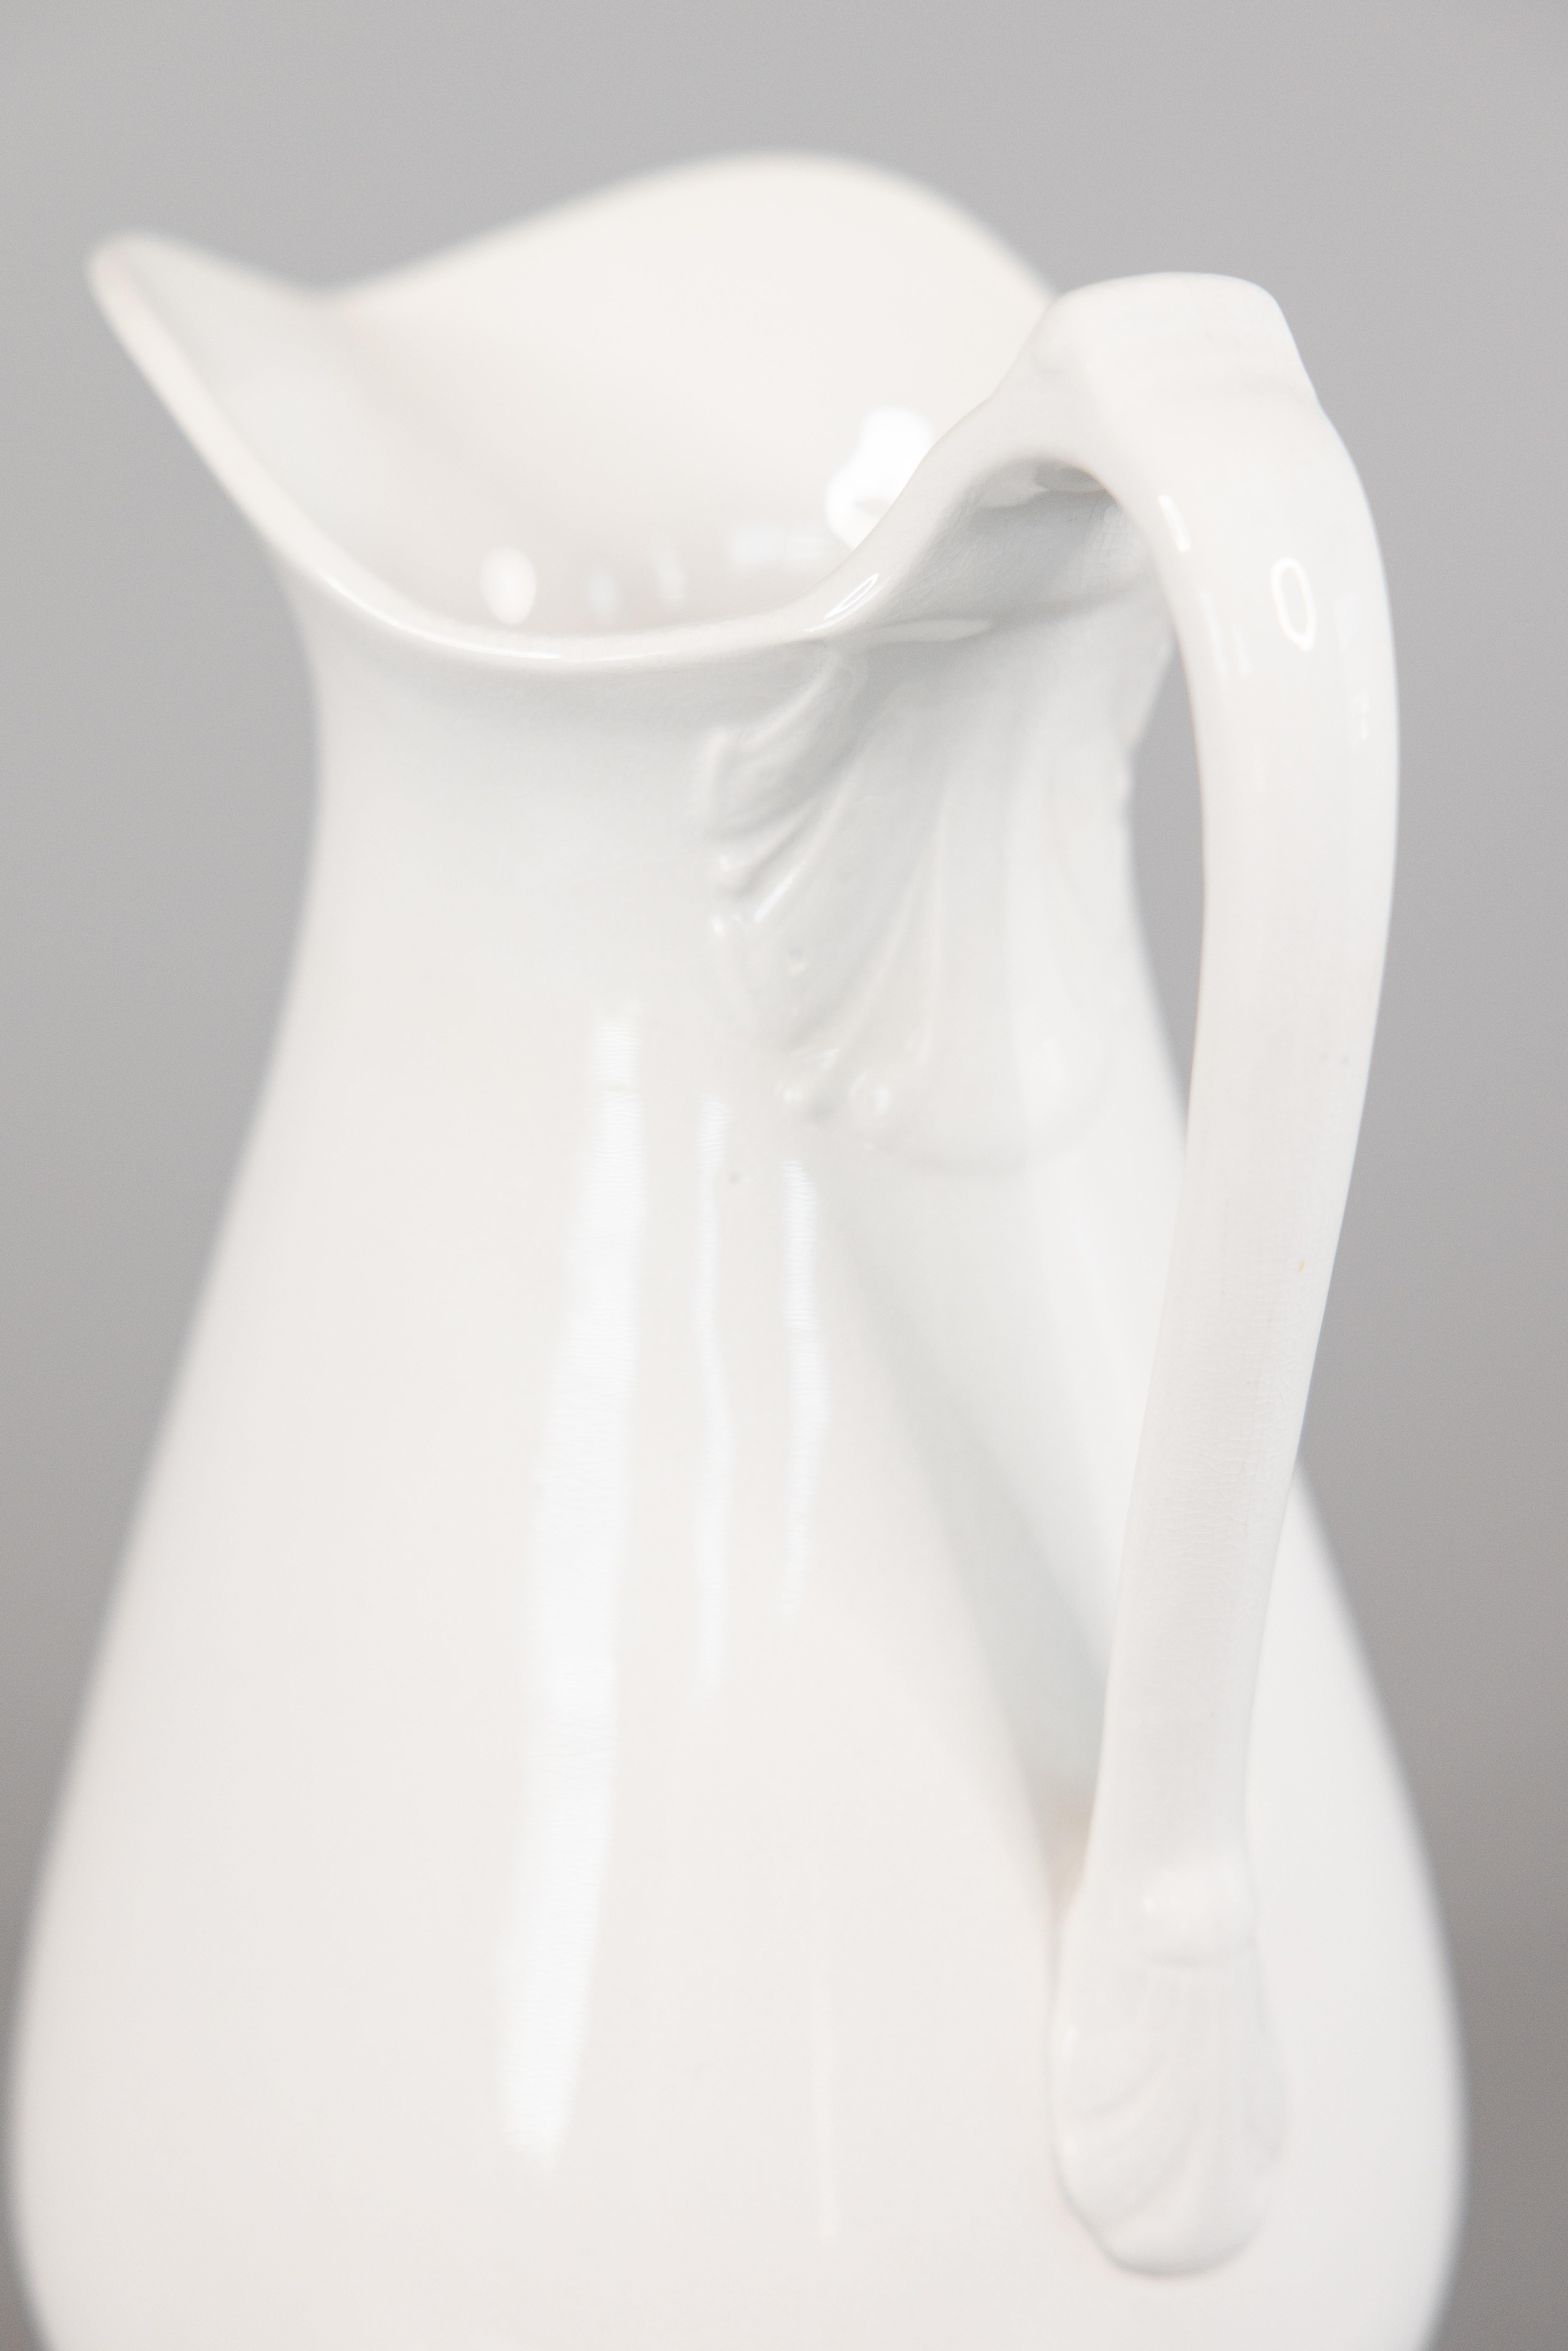 antique white pitcher